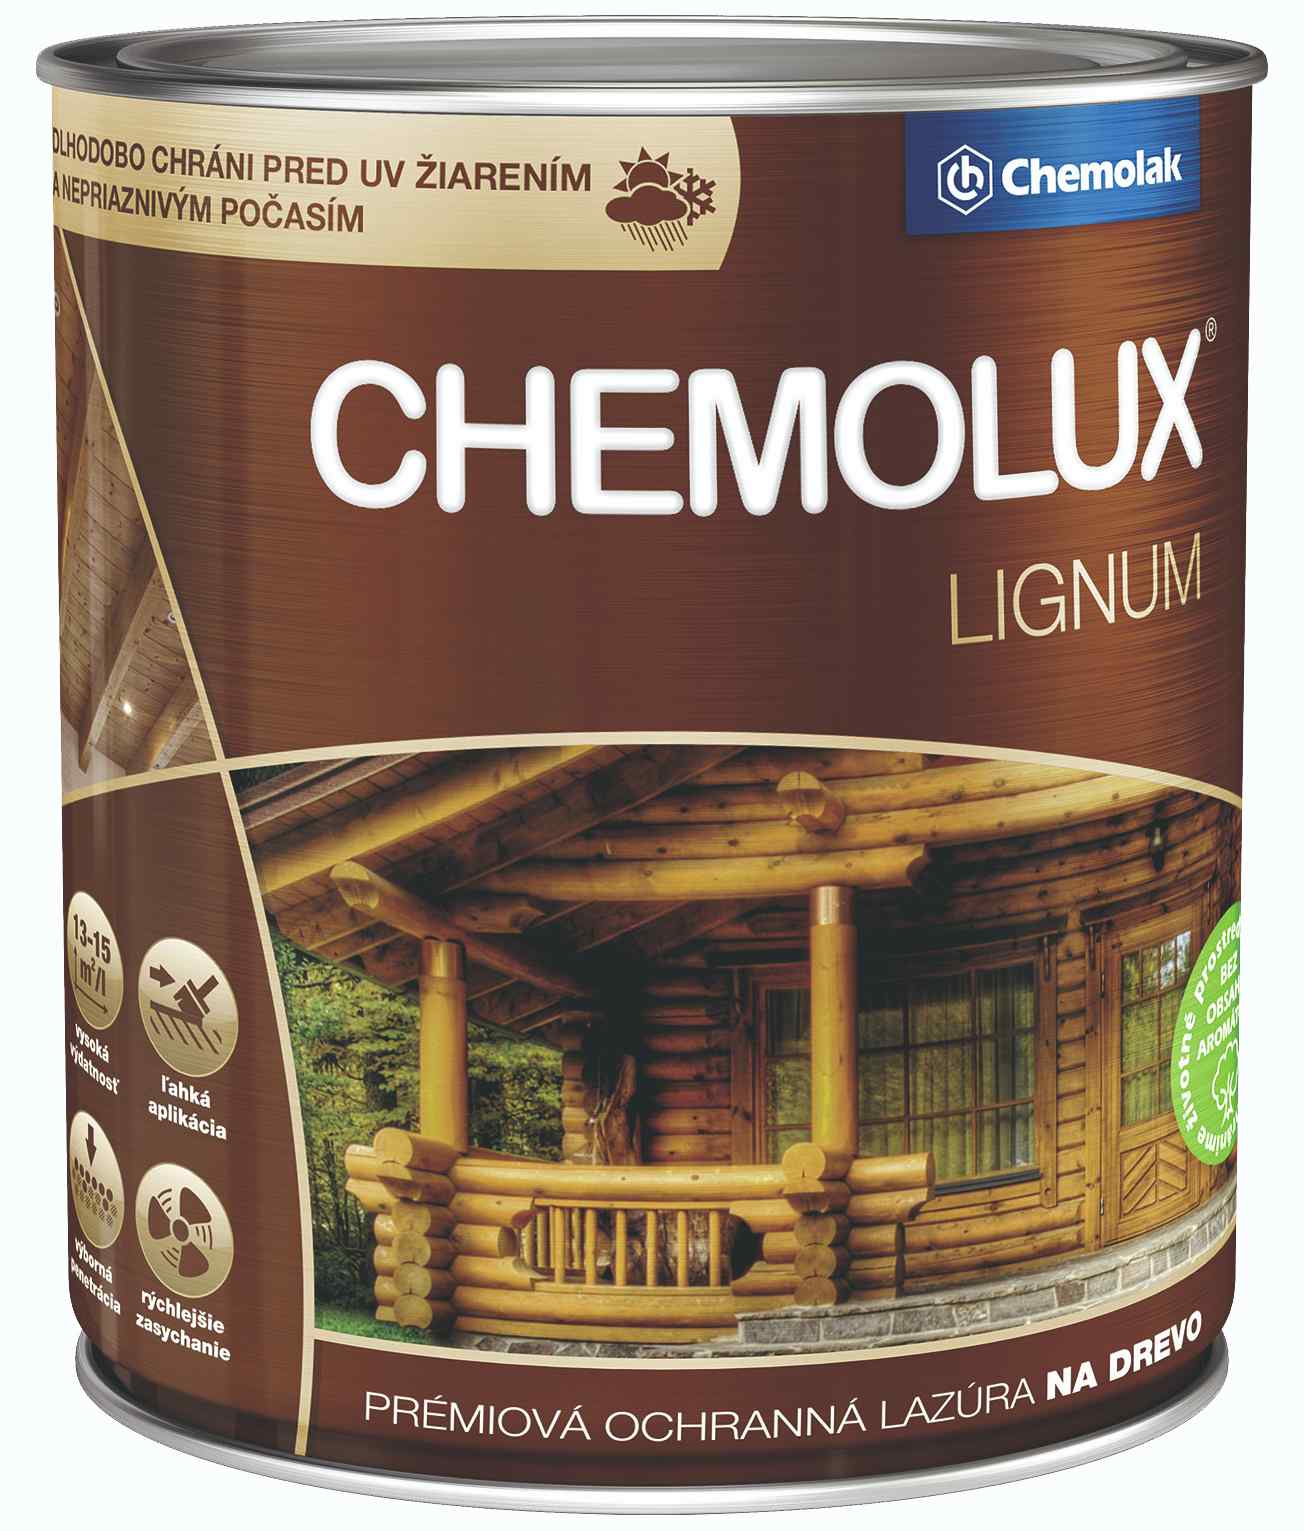 24_Chemolak_Chemolux Lignum